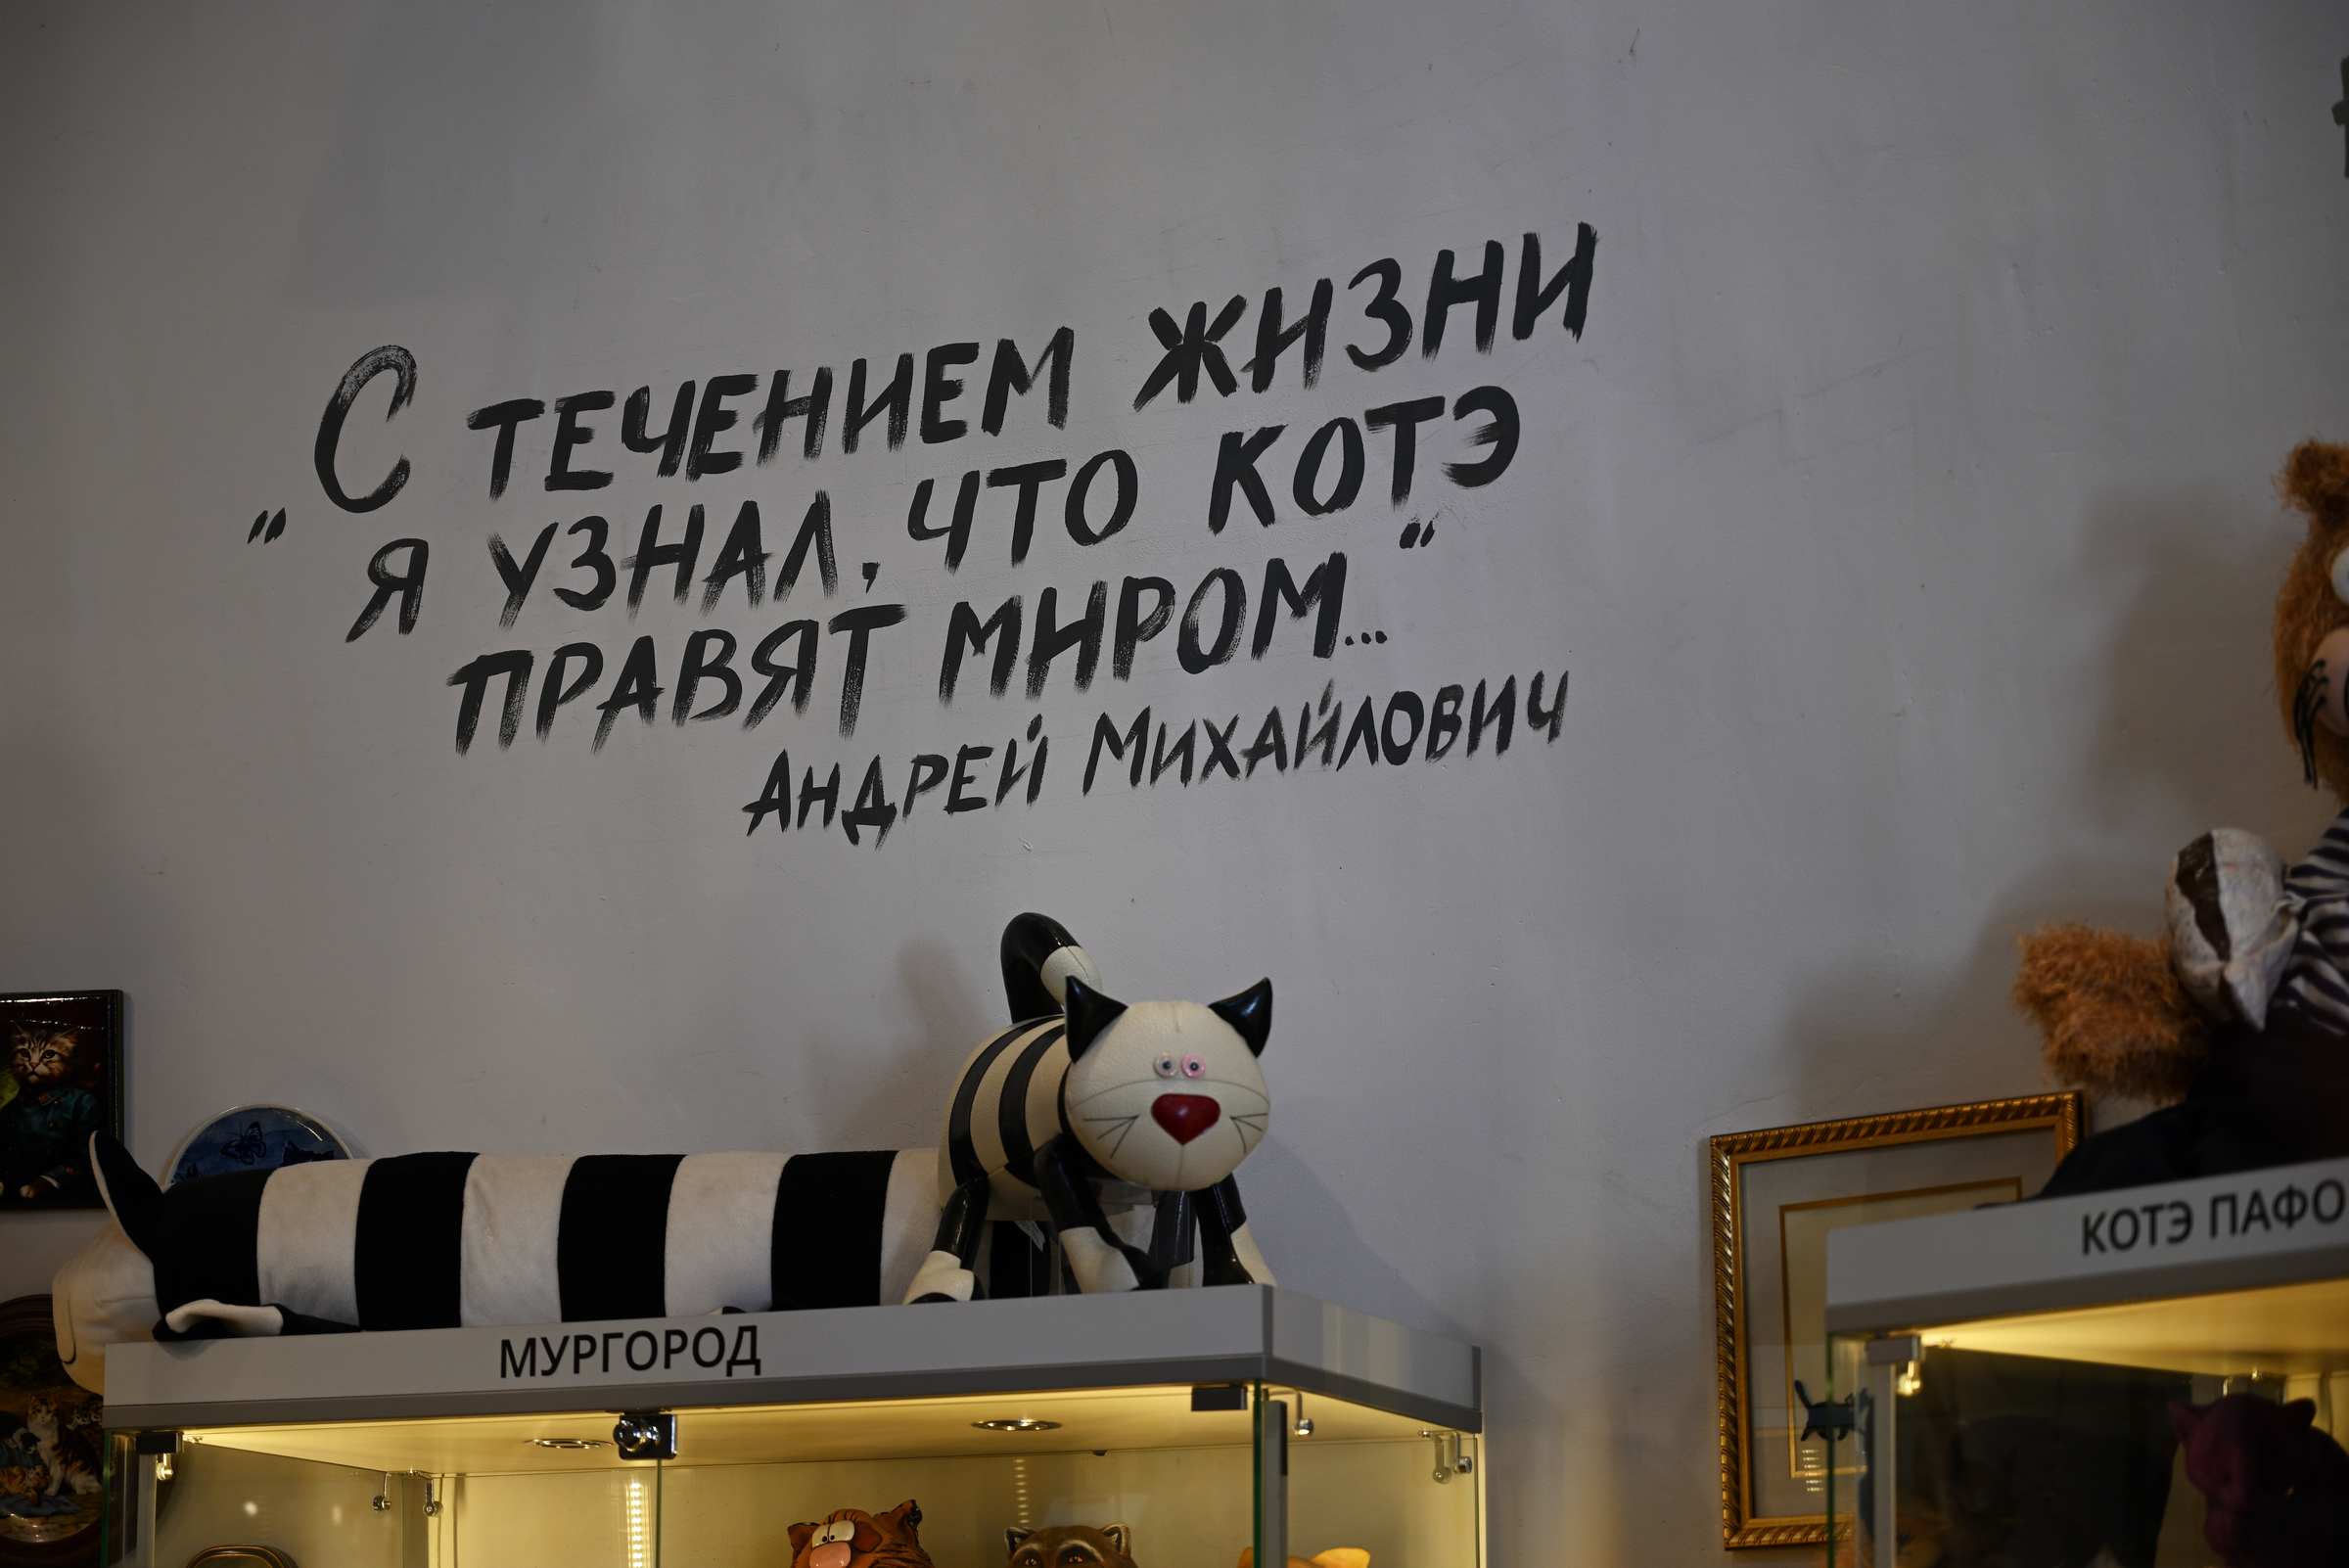 Музей кошек Мурариум в Зеленоградске